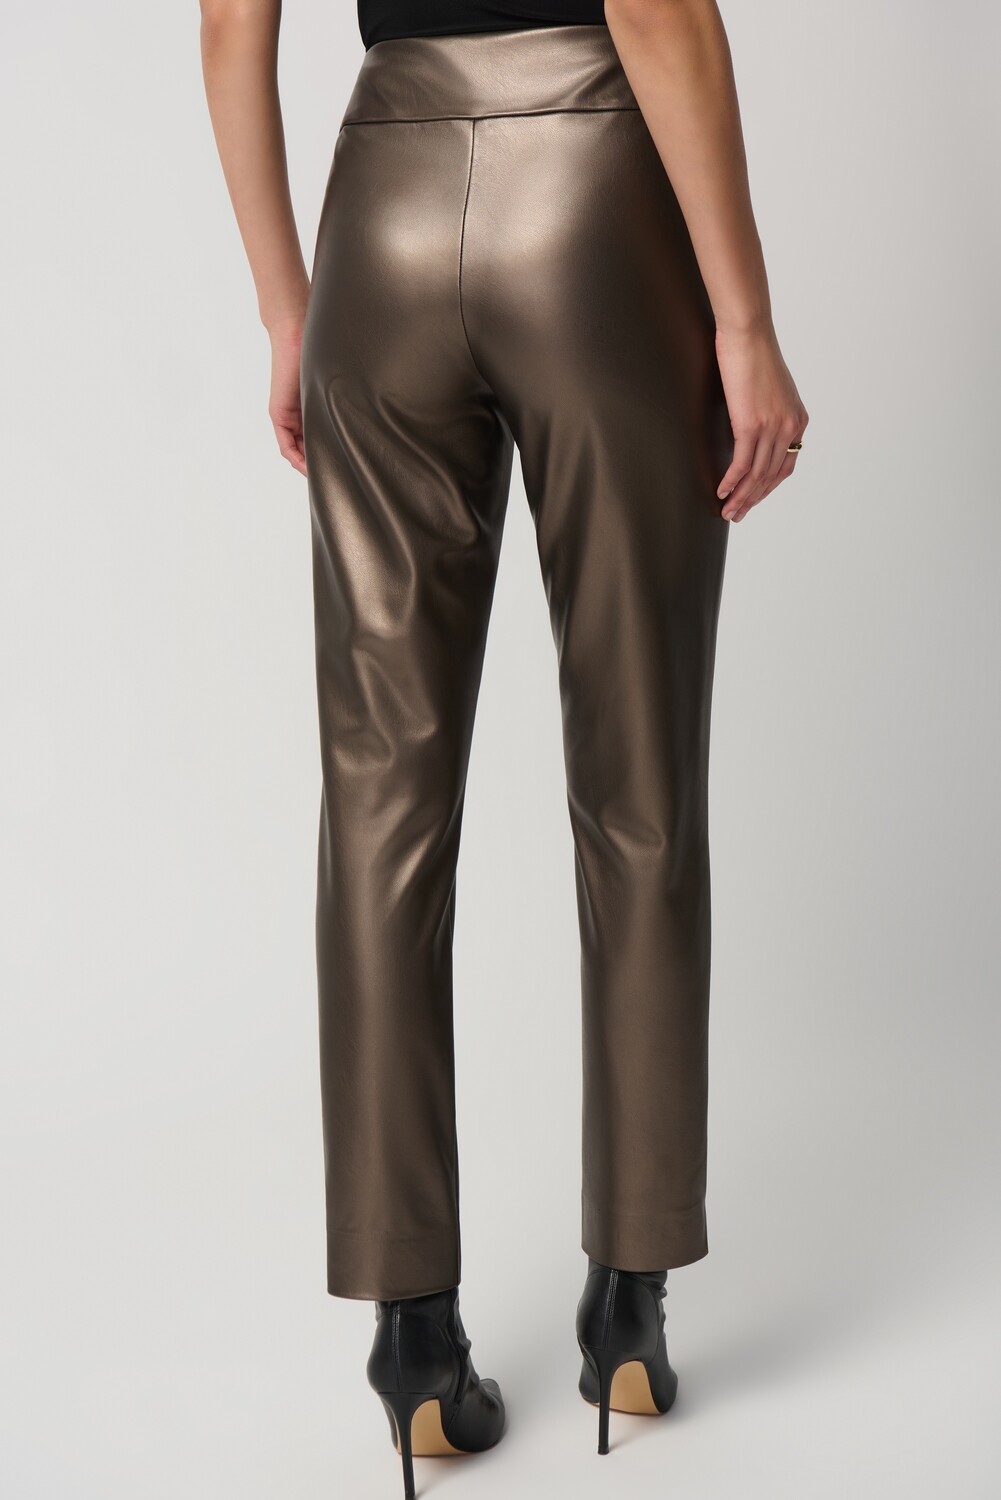 Joseph Ribkoff Metallic Faux Leather Slim Fit Pull-On Pants